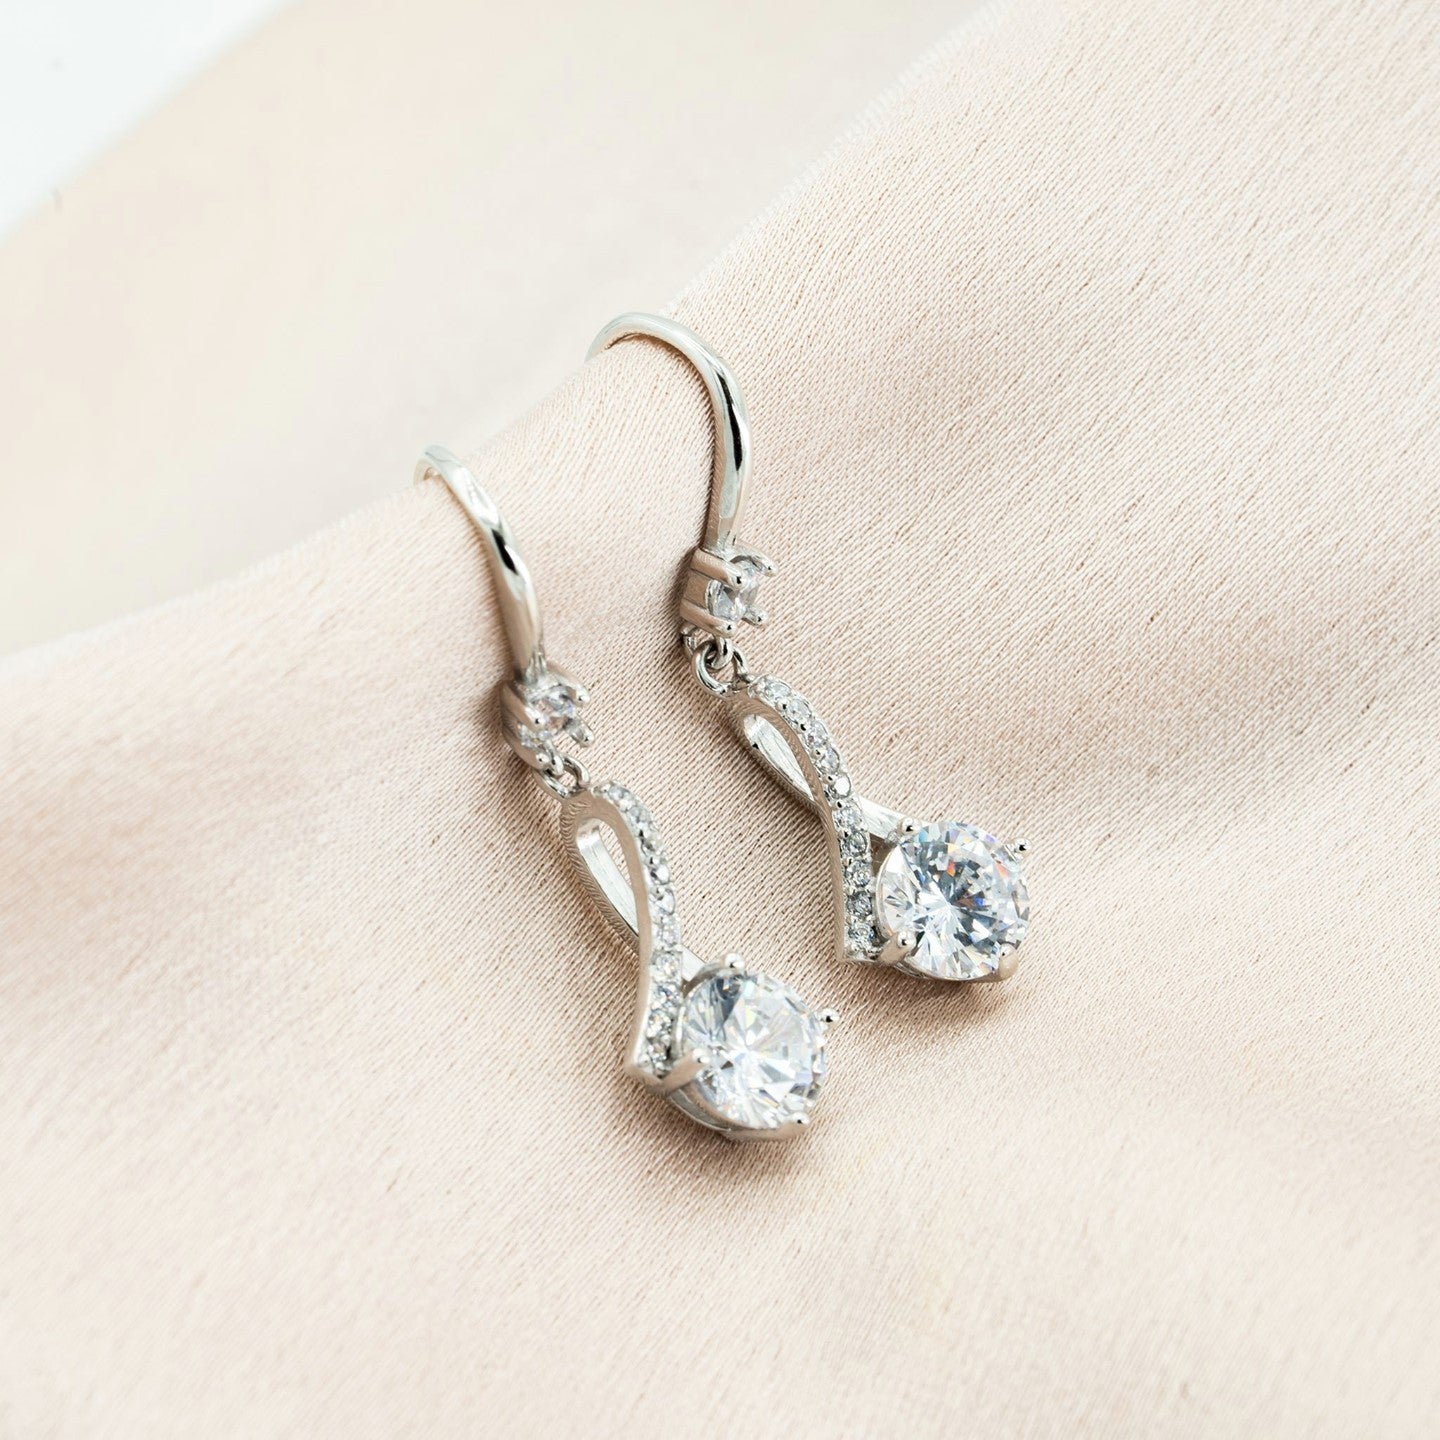 Alluring Zirconia Earrings - 925 Sterling Silver Rakva